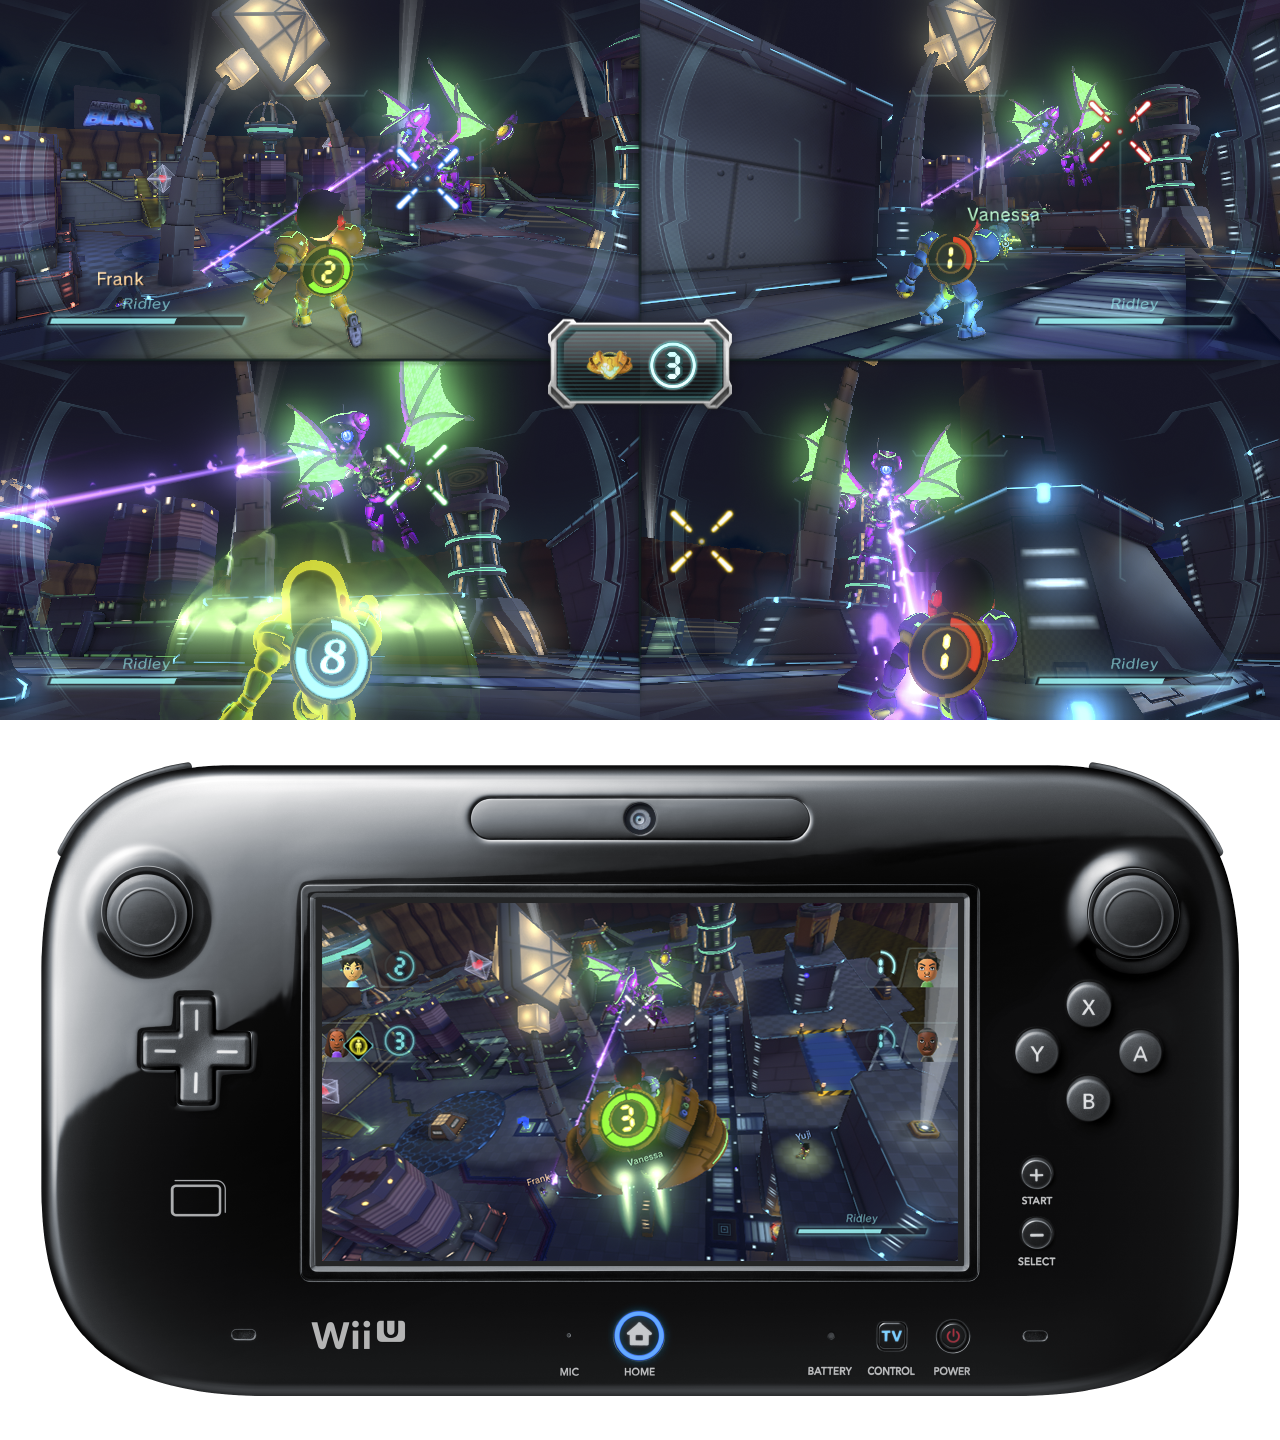 Nintendoland Jogo Para Nintendo Wii U - Nintendo Wiiu - #